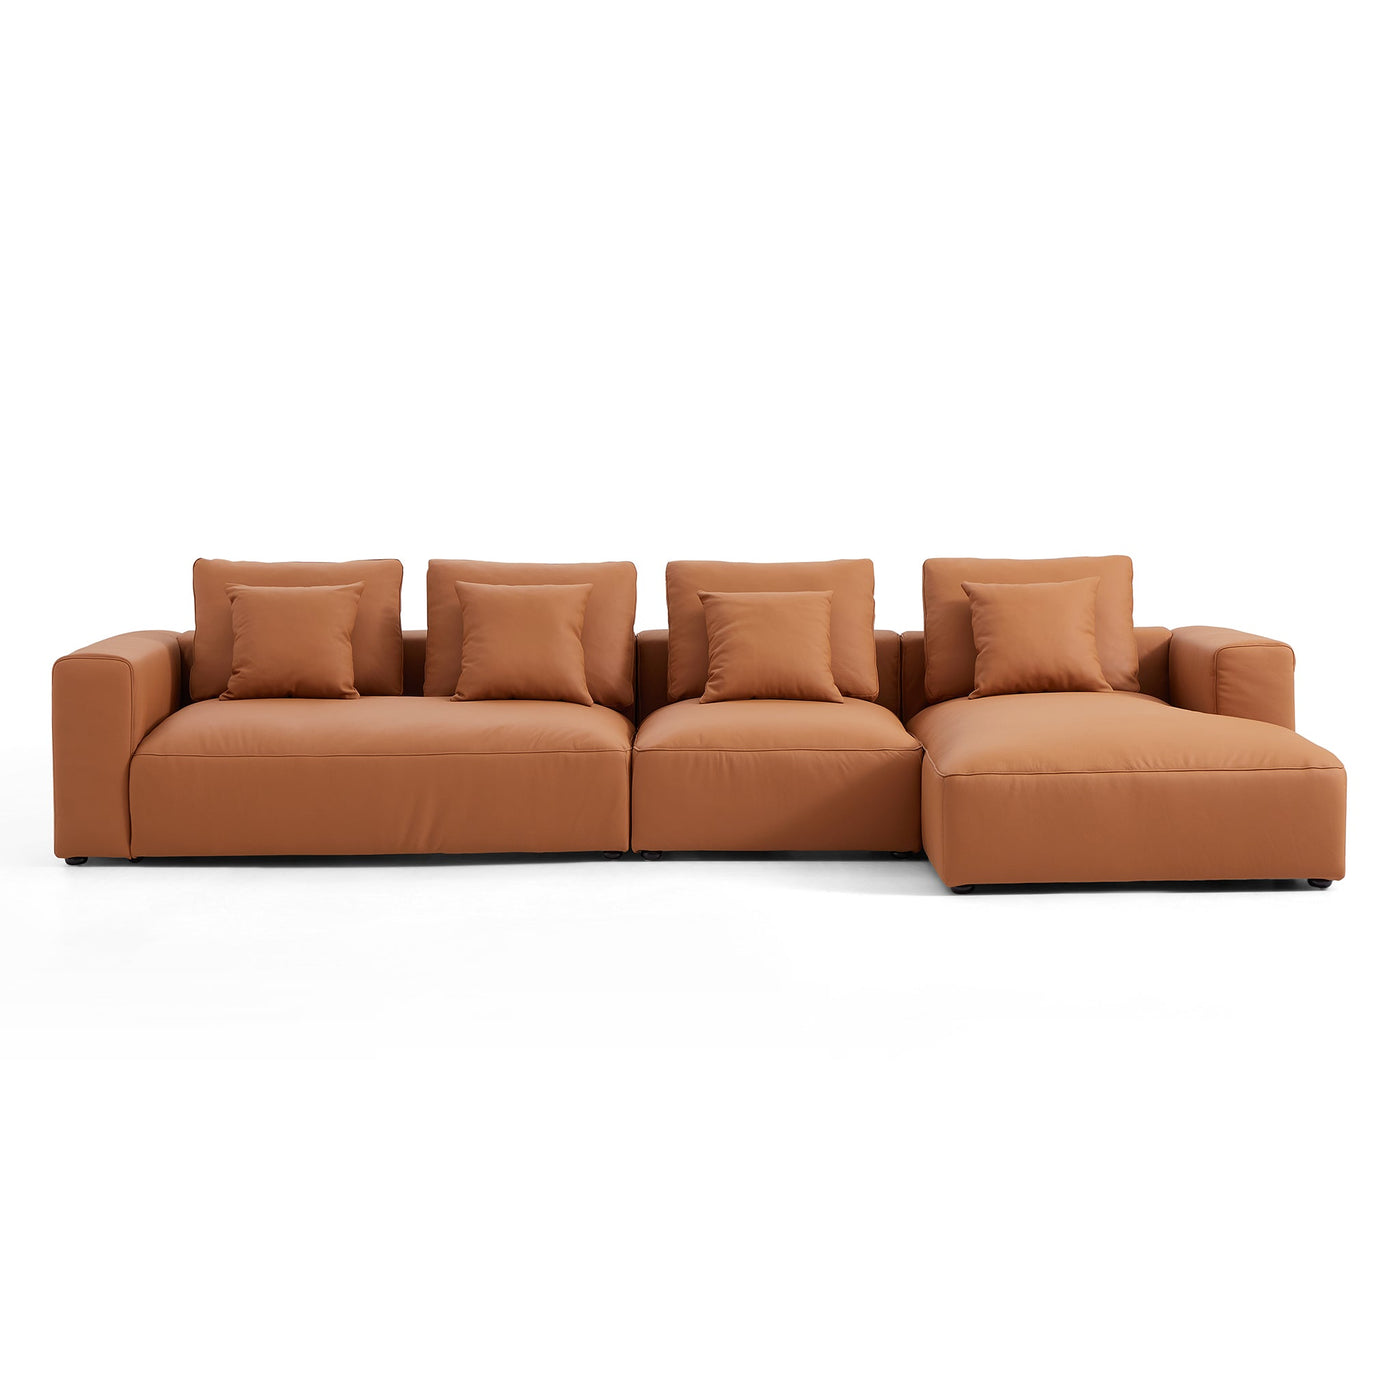 Nathan Modular Orange Leather Sectional Sofa-Orange-151.0"-Facing Right